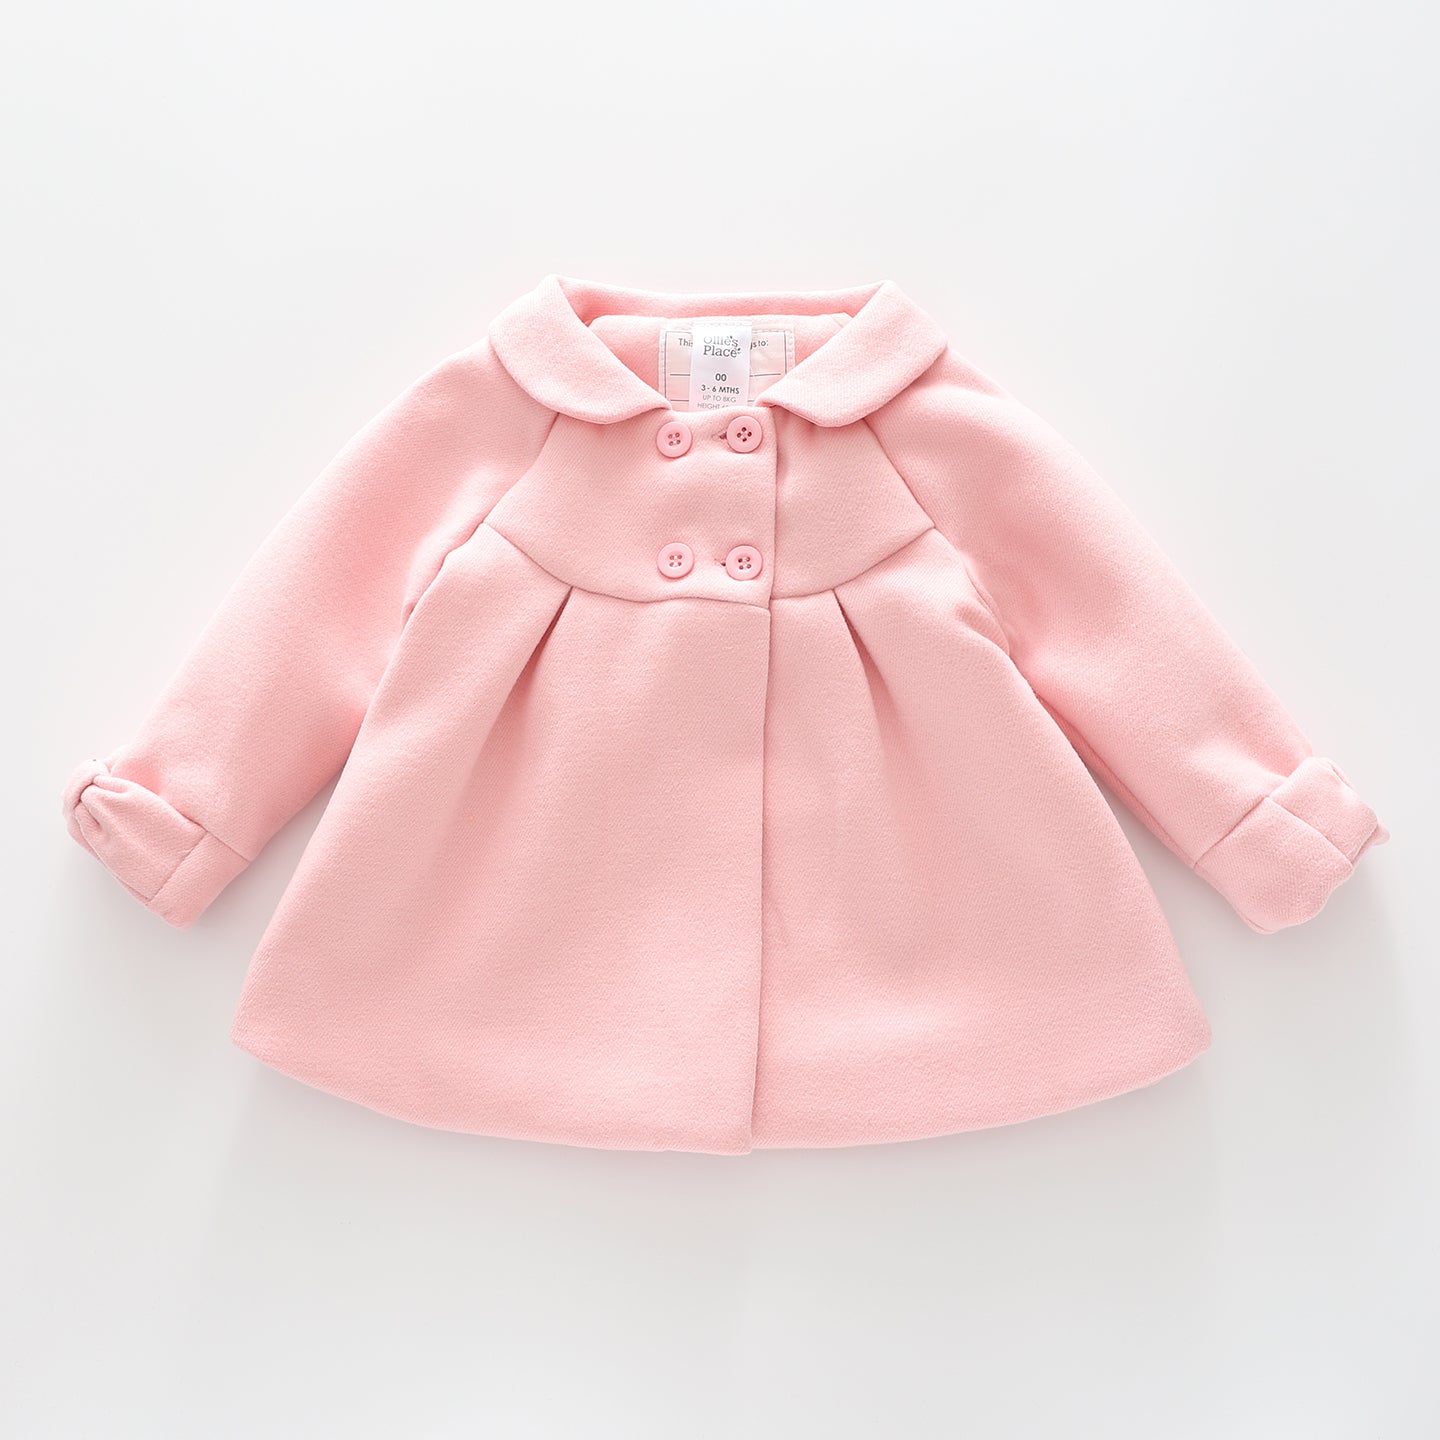 Pink Bow Swing Coat - Toddler Girl